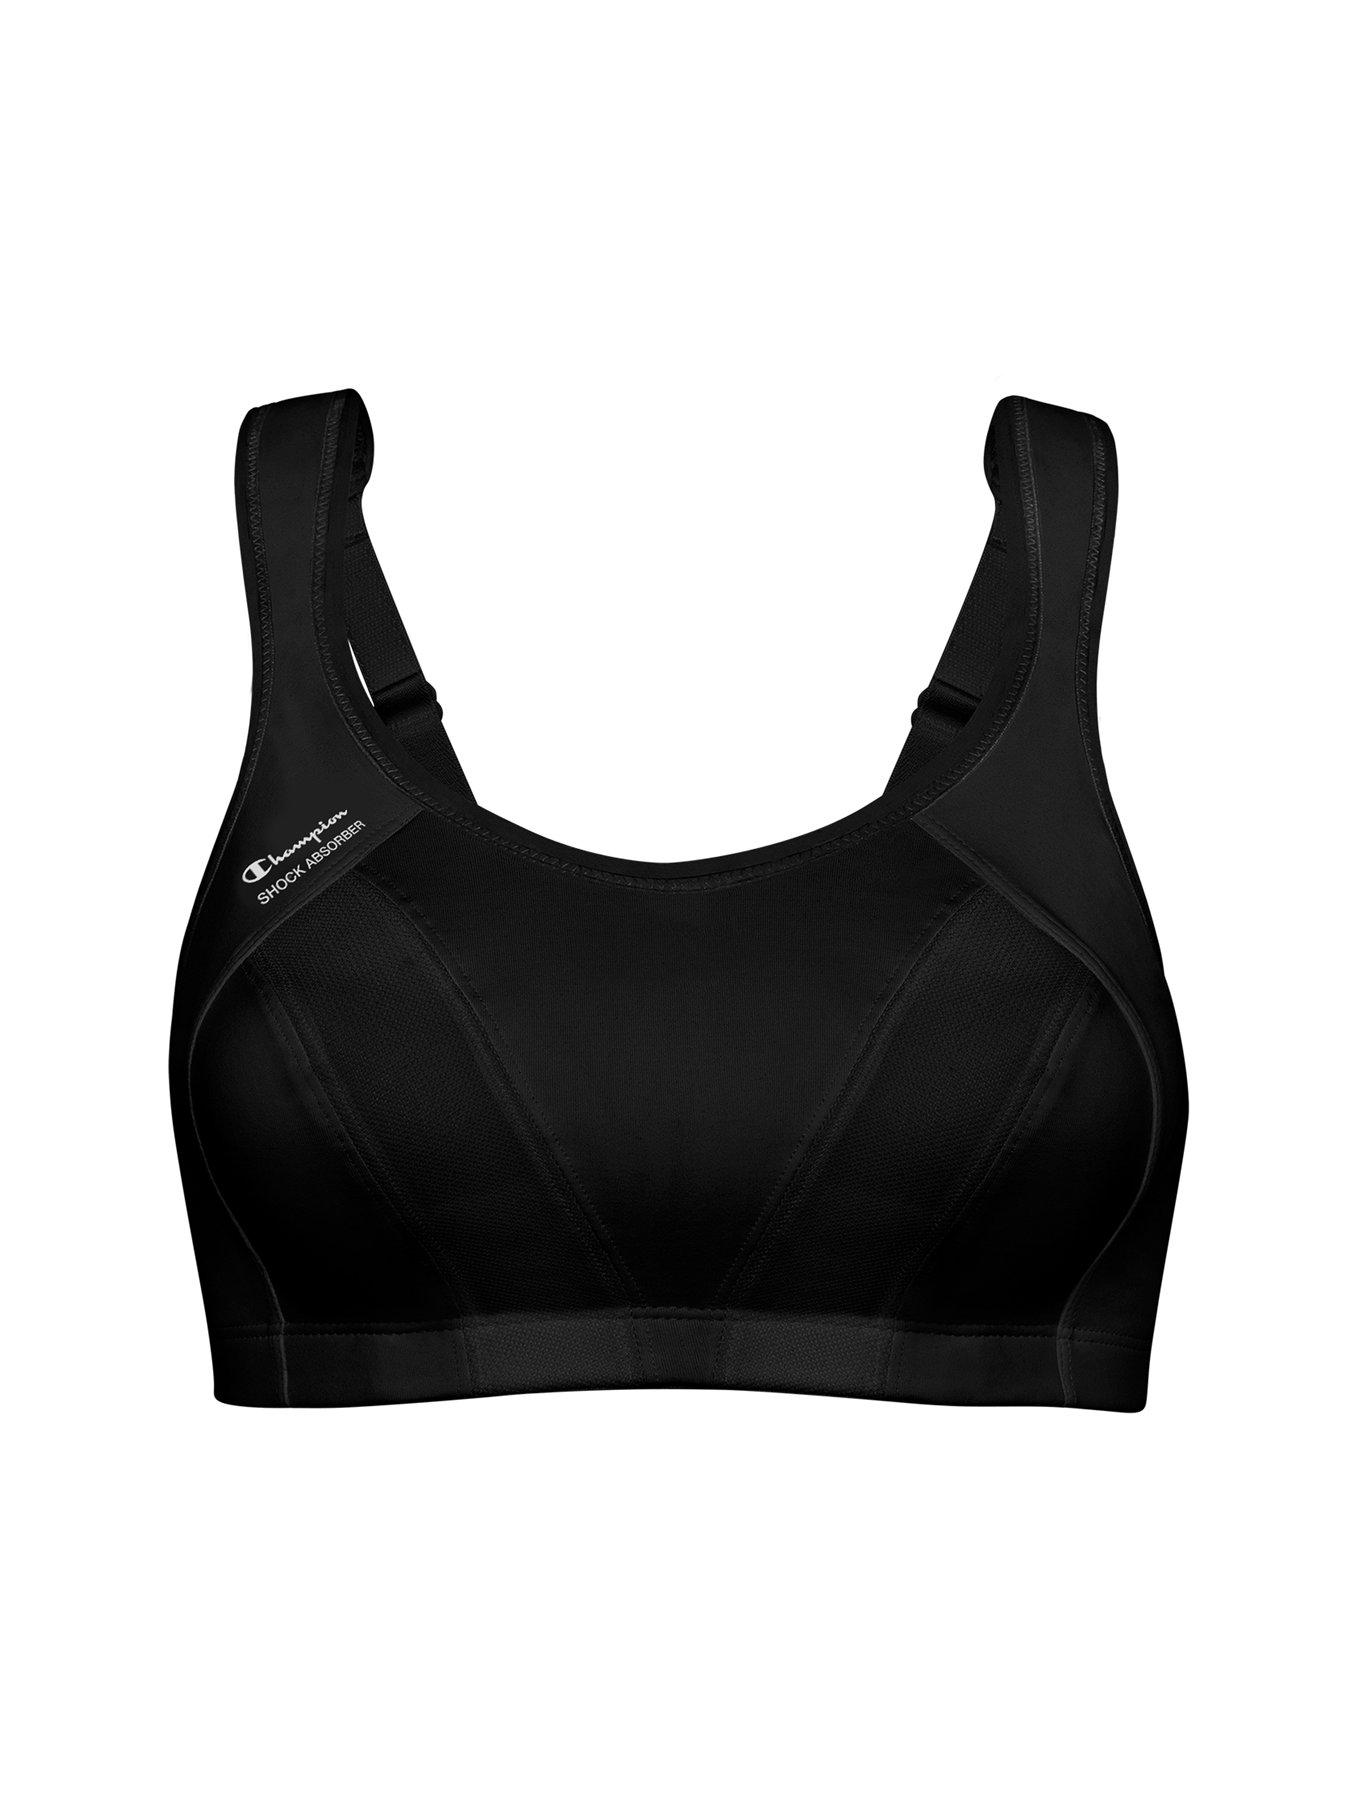 Active Multi Sports sports bra in grey Shock Absorber